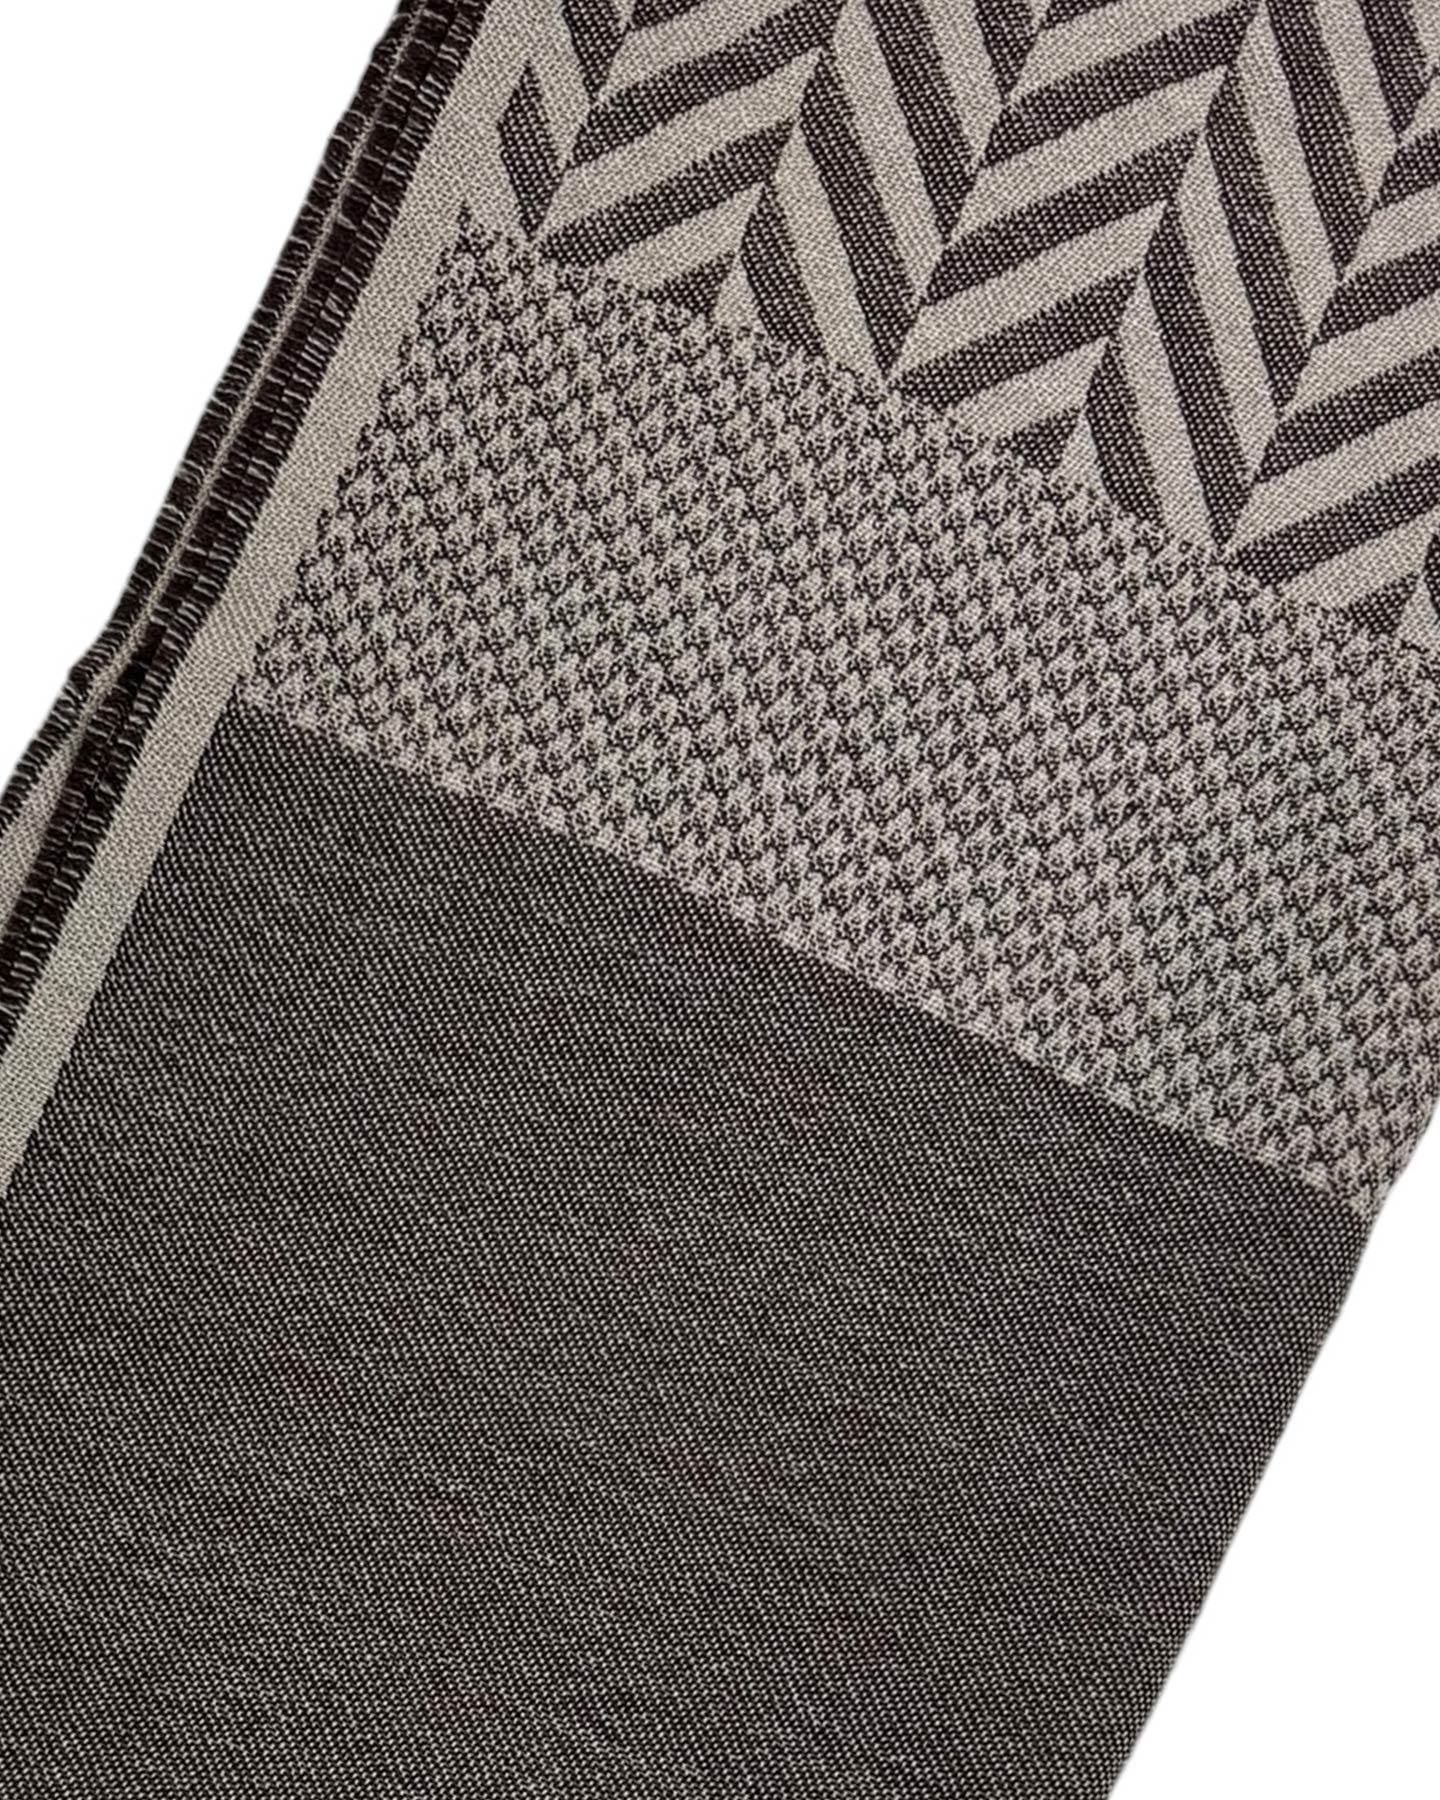 Kiton Scarf Gray Brown Pattern - Luxury Cashmere Blend